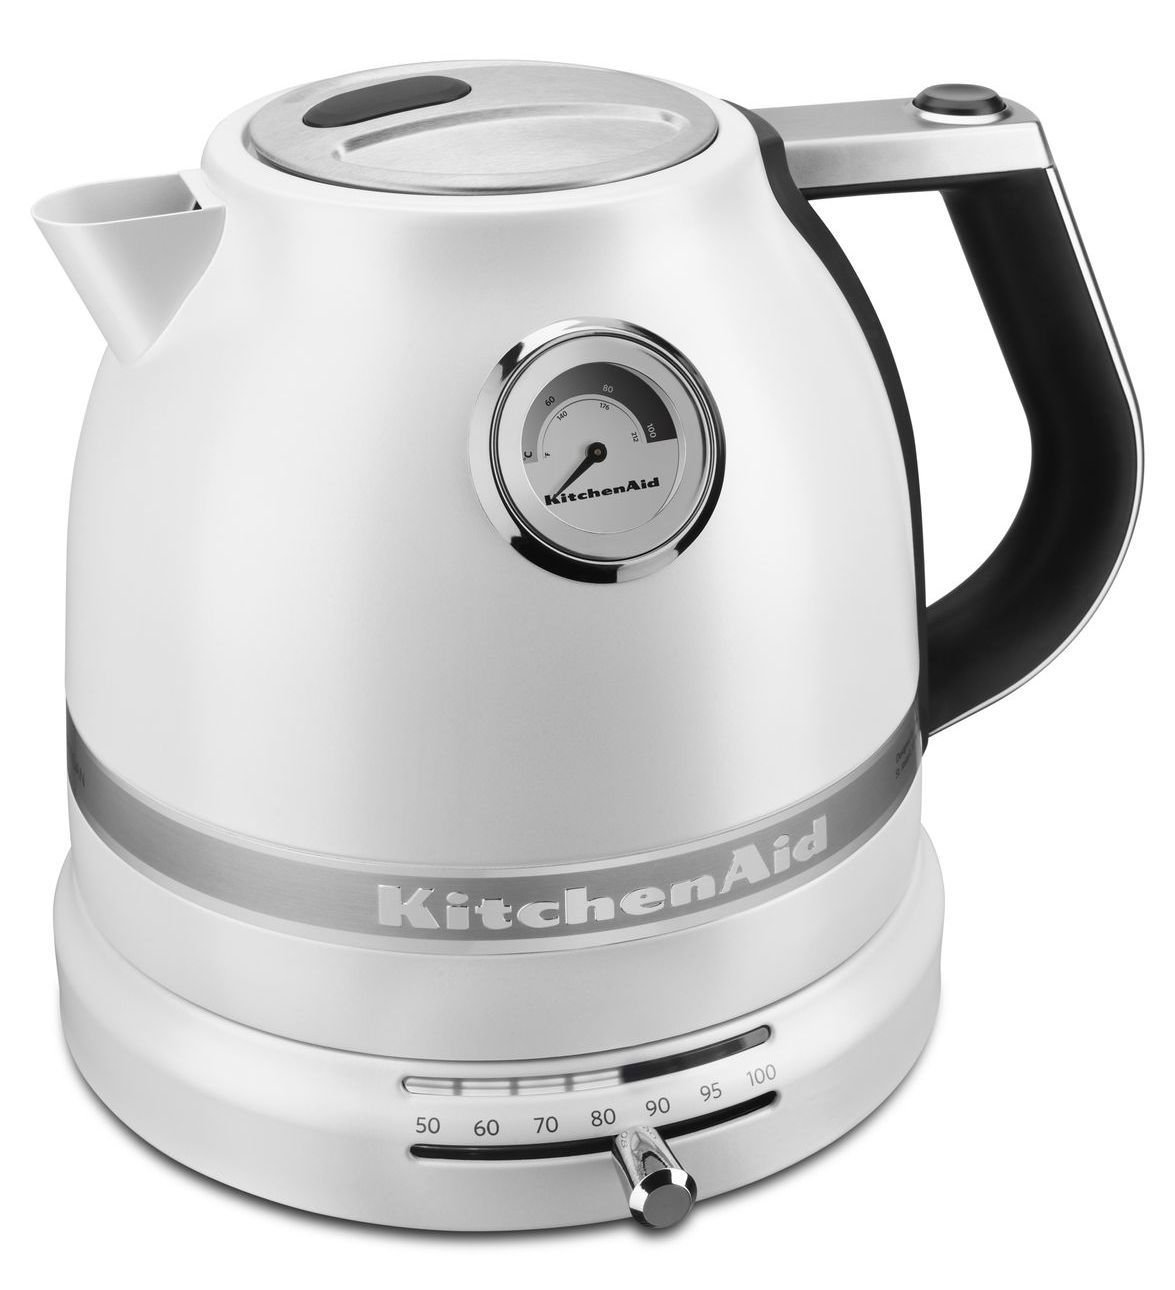 KEK1522MS by KitchenAid - 1.5 L Pro Line® Series Electric Kettle